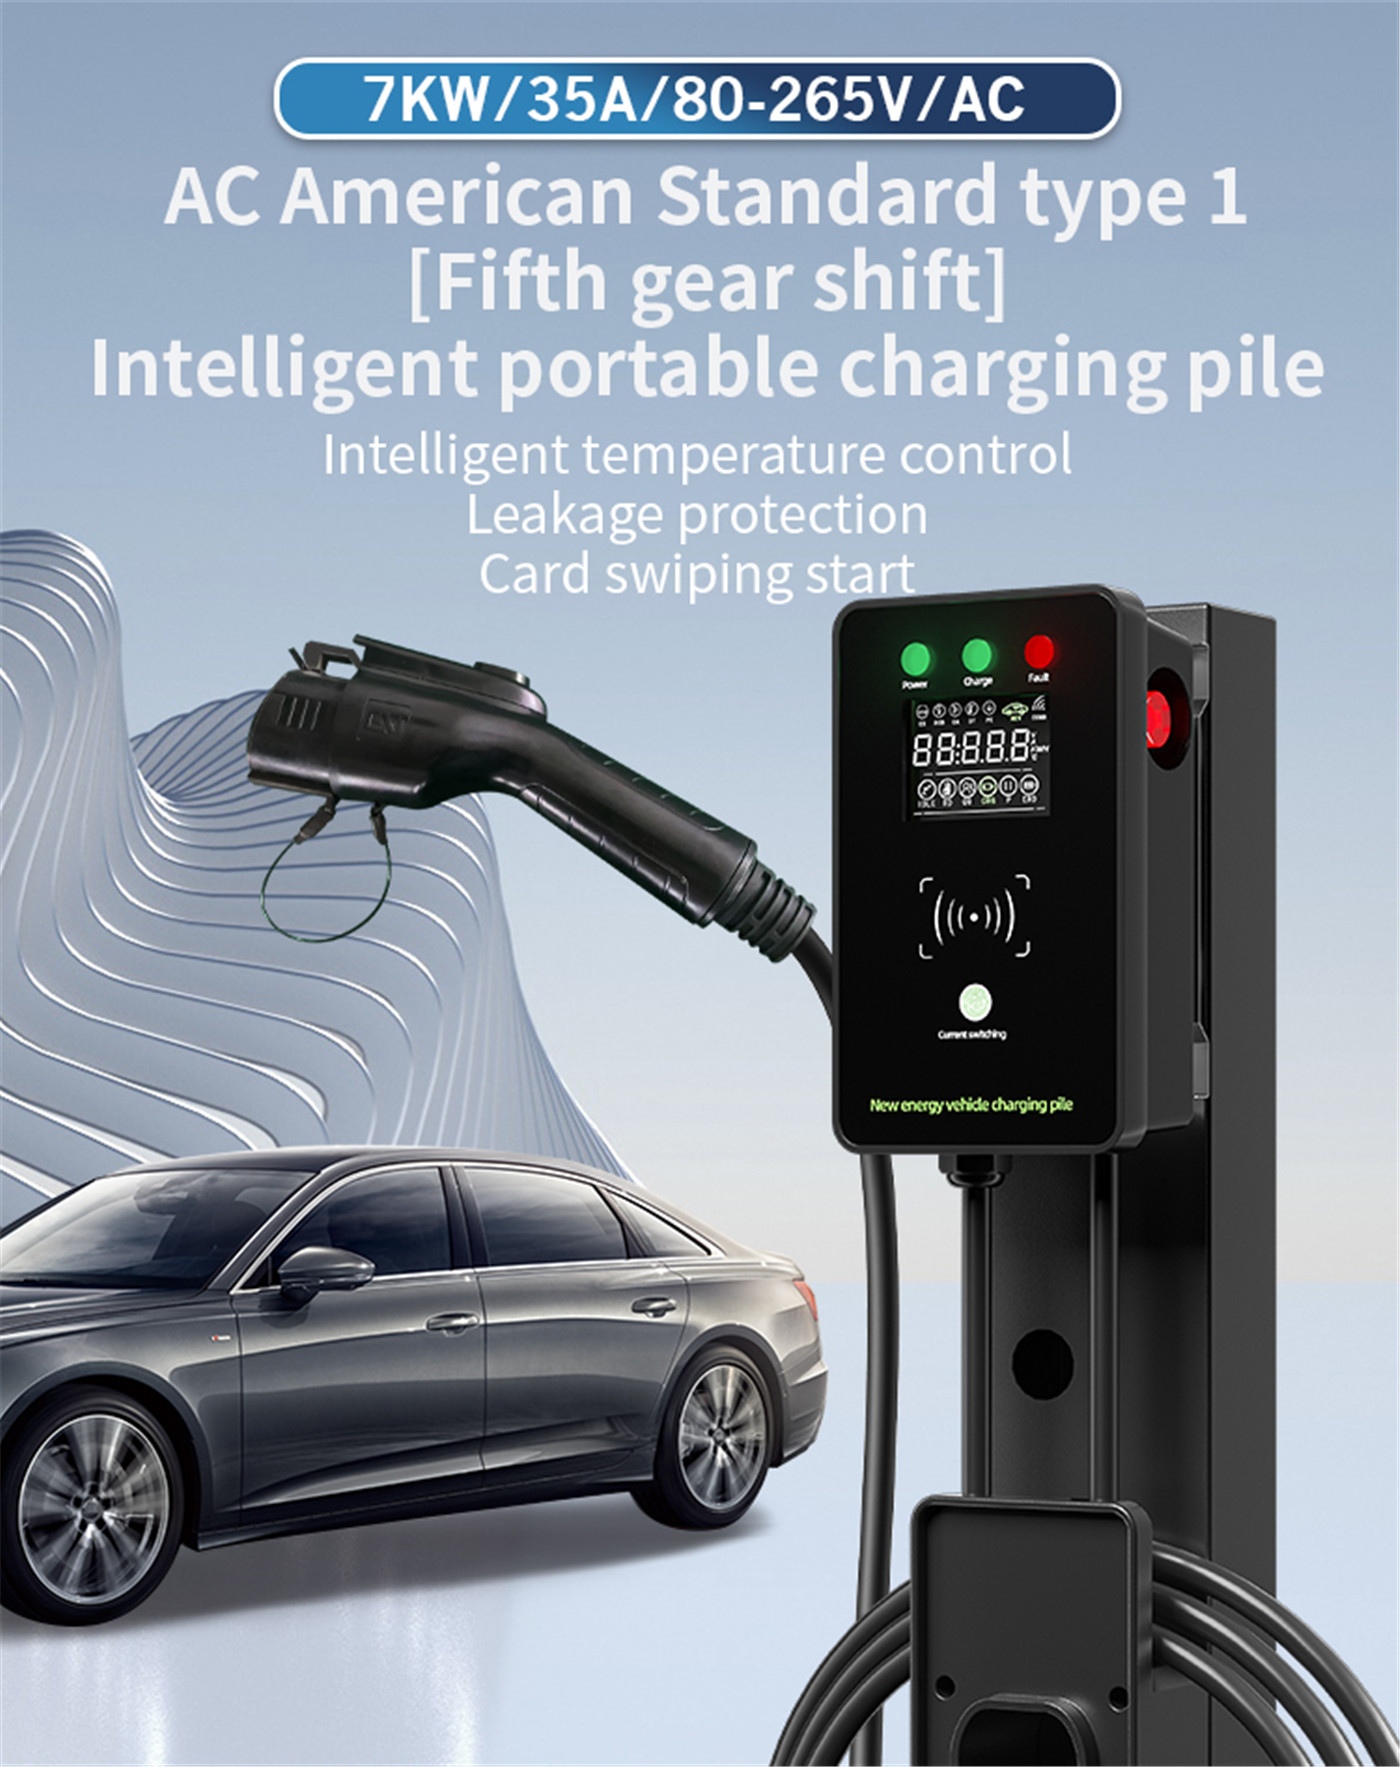 5 gear shift intelligent portable card swiping start charging pile-04 (1)